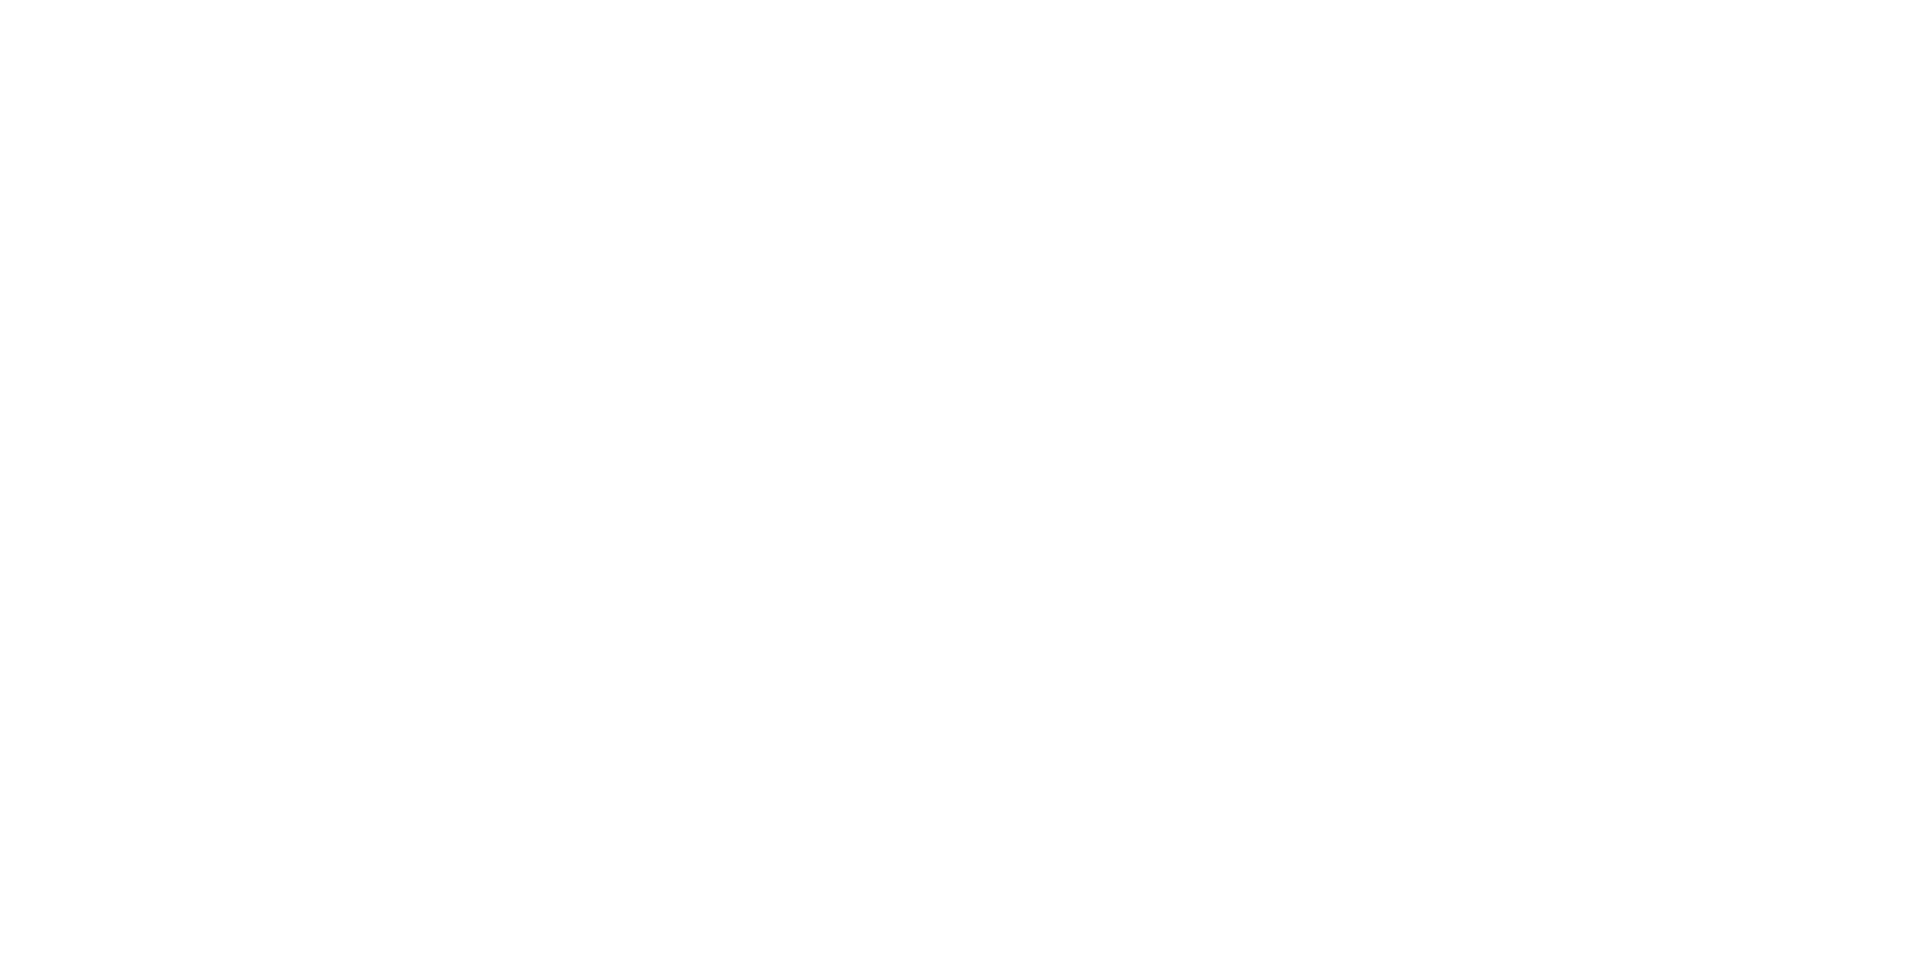 Distillerie Arsenal & CO